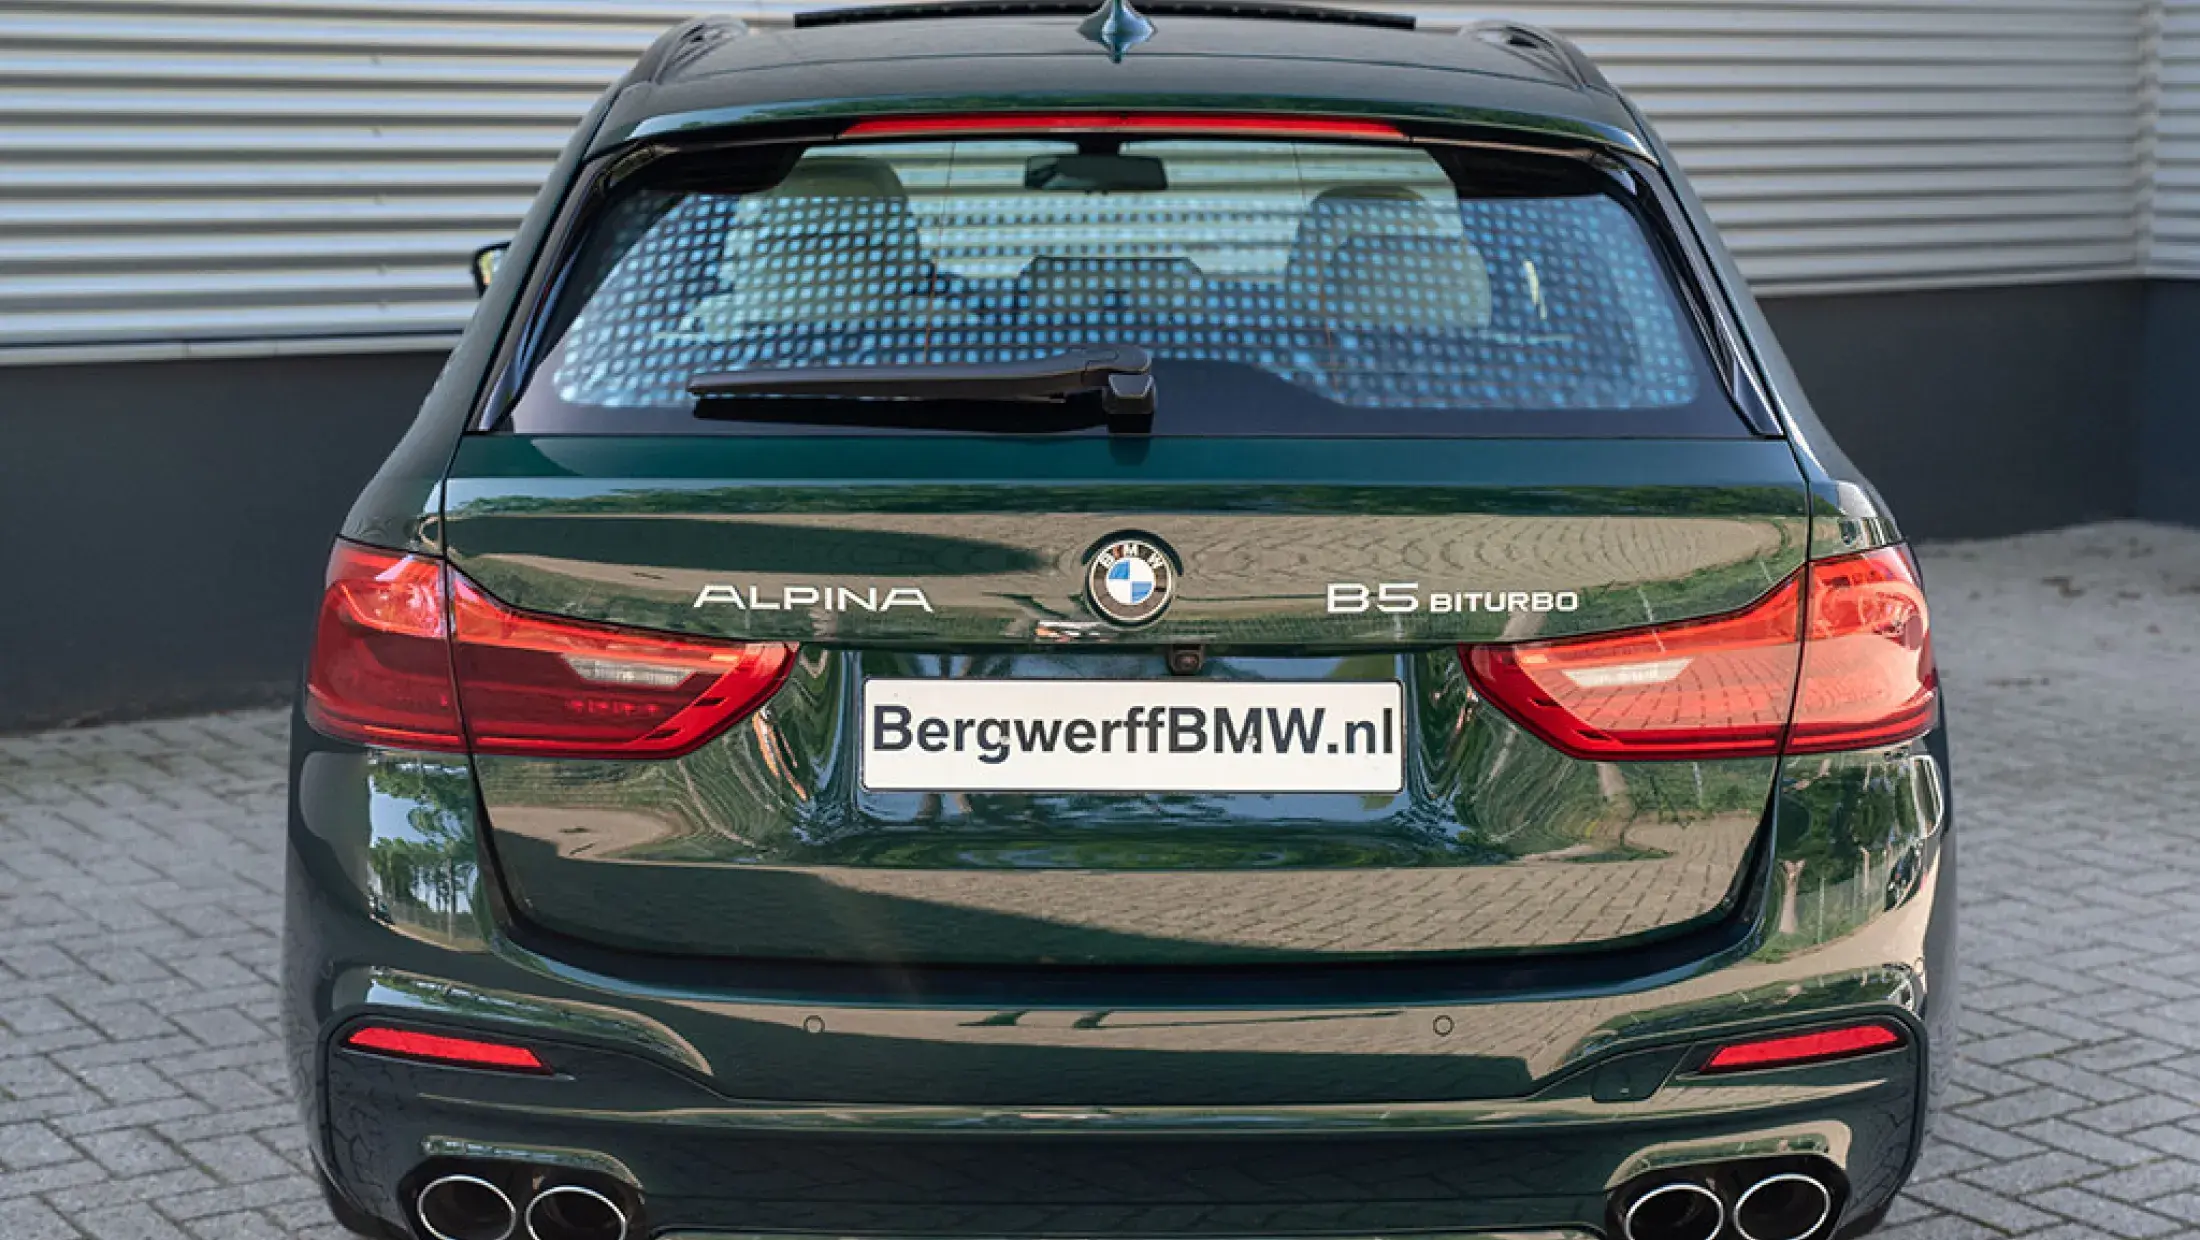 BMW ALPINA B5 Touring Bi-Turbo iDrive 7 High Performance Brakes Alpinagruen II Metallic BMW Individual Volleder Rauchweiss G31 Bergwerff